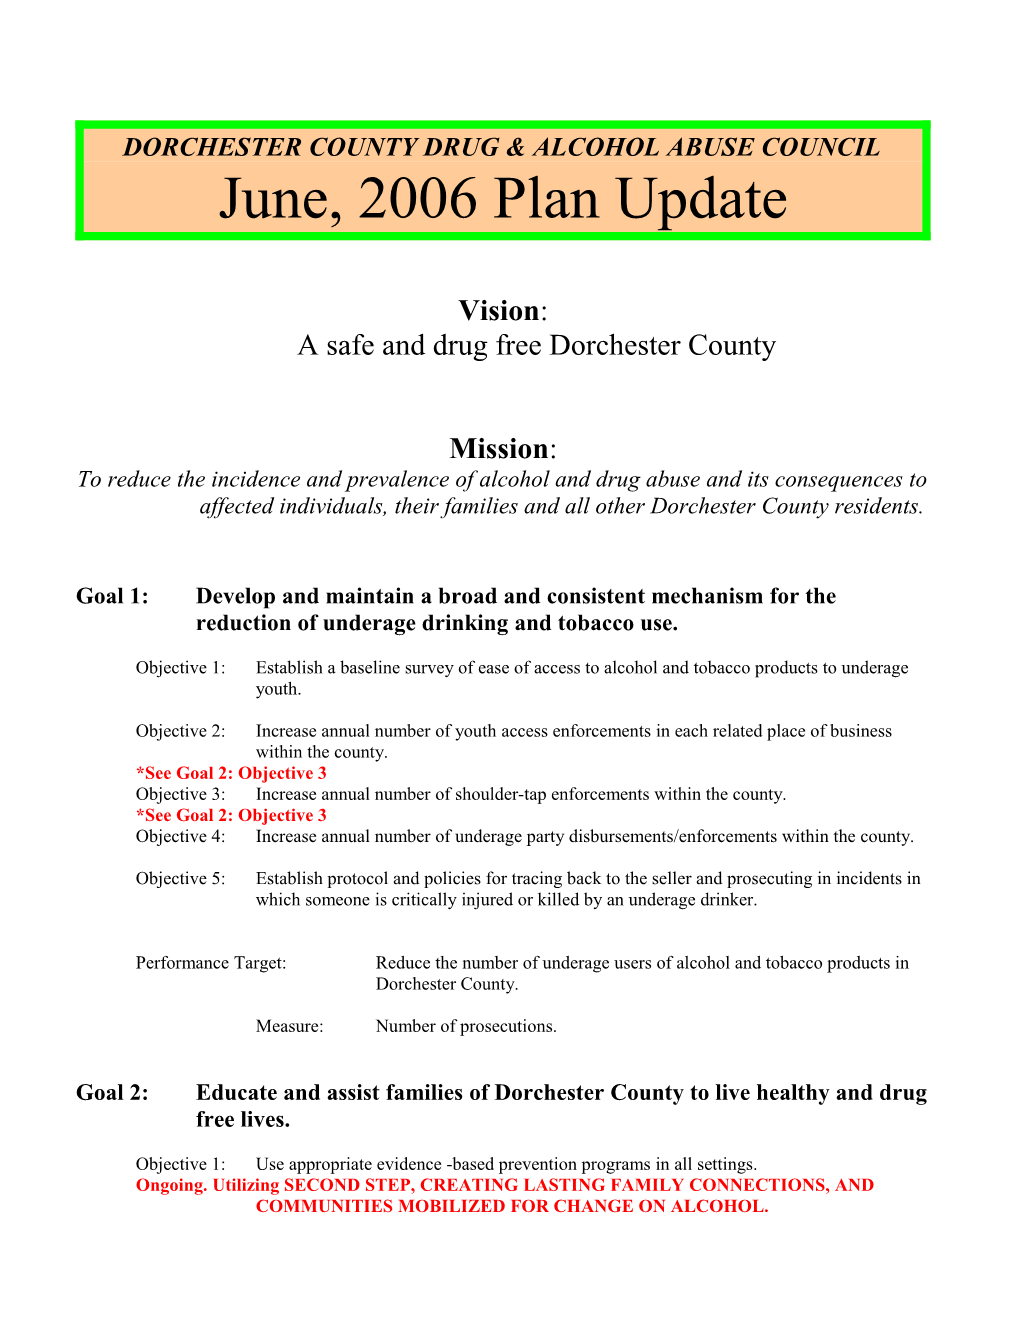 Dorchestercounty Drug & Alcohol Abuse Council